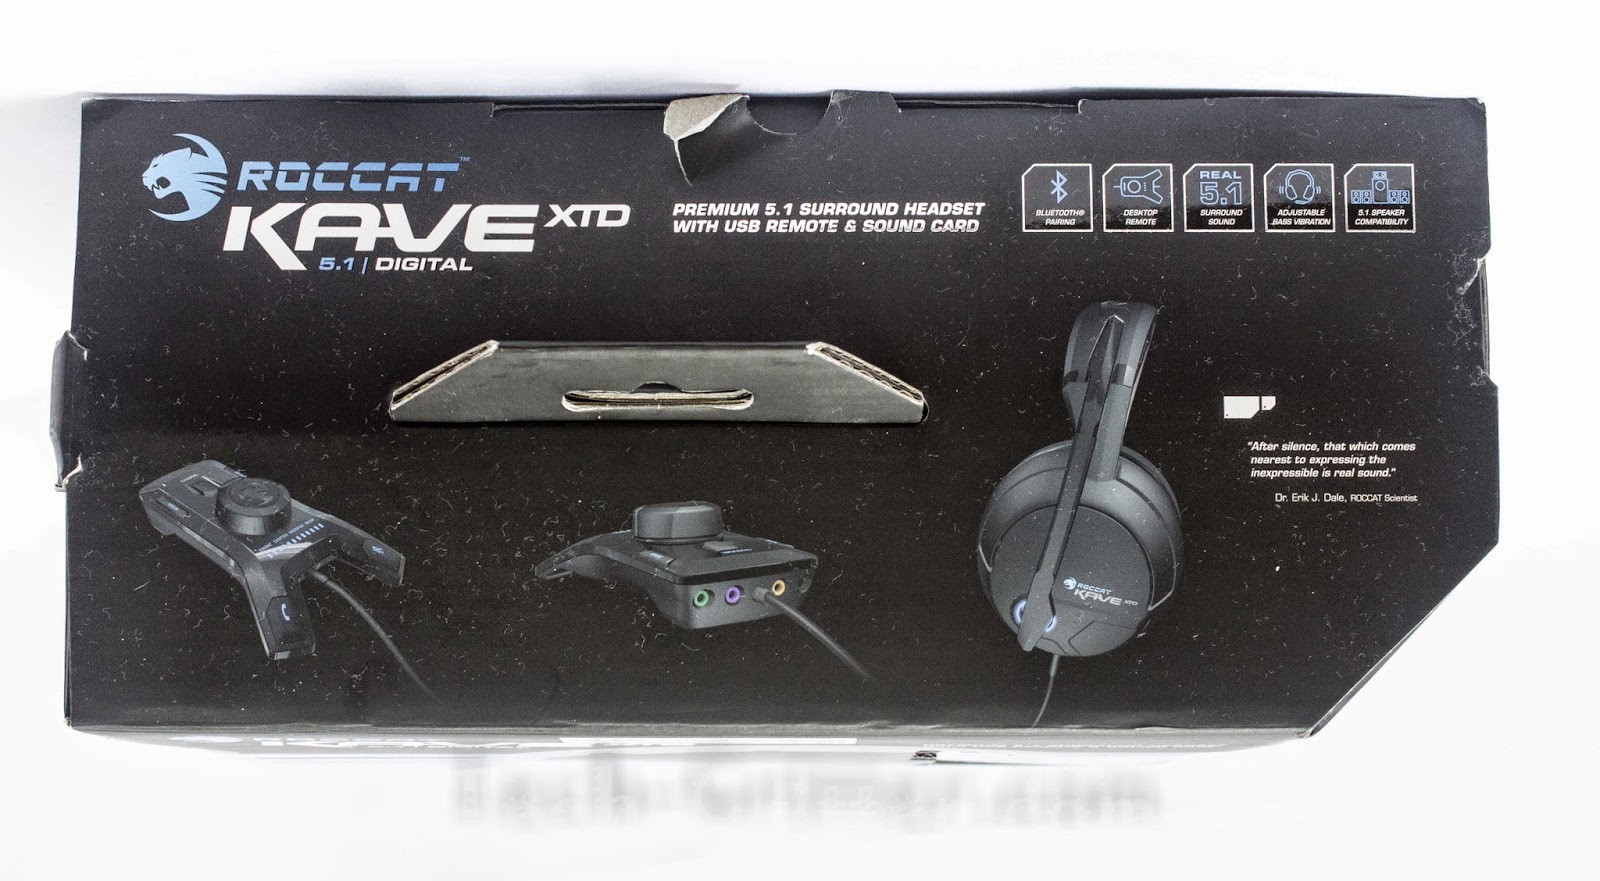 Unboxing & Review: Roccat Kave XTD 5.1 Digital Surround Sound Headset 57